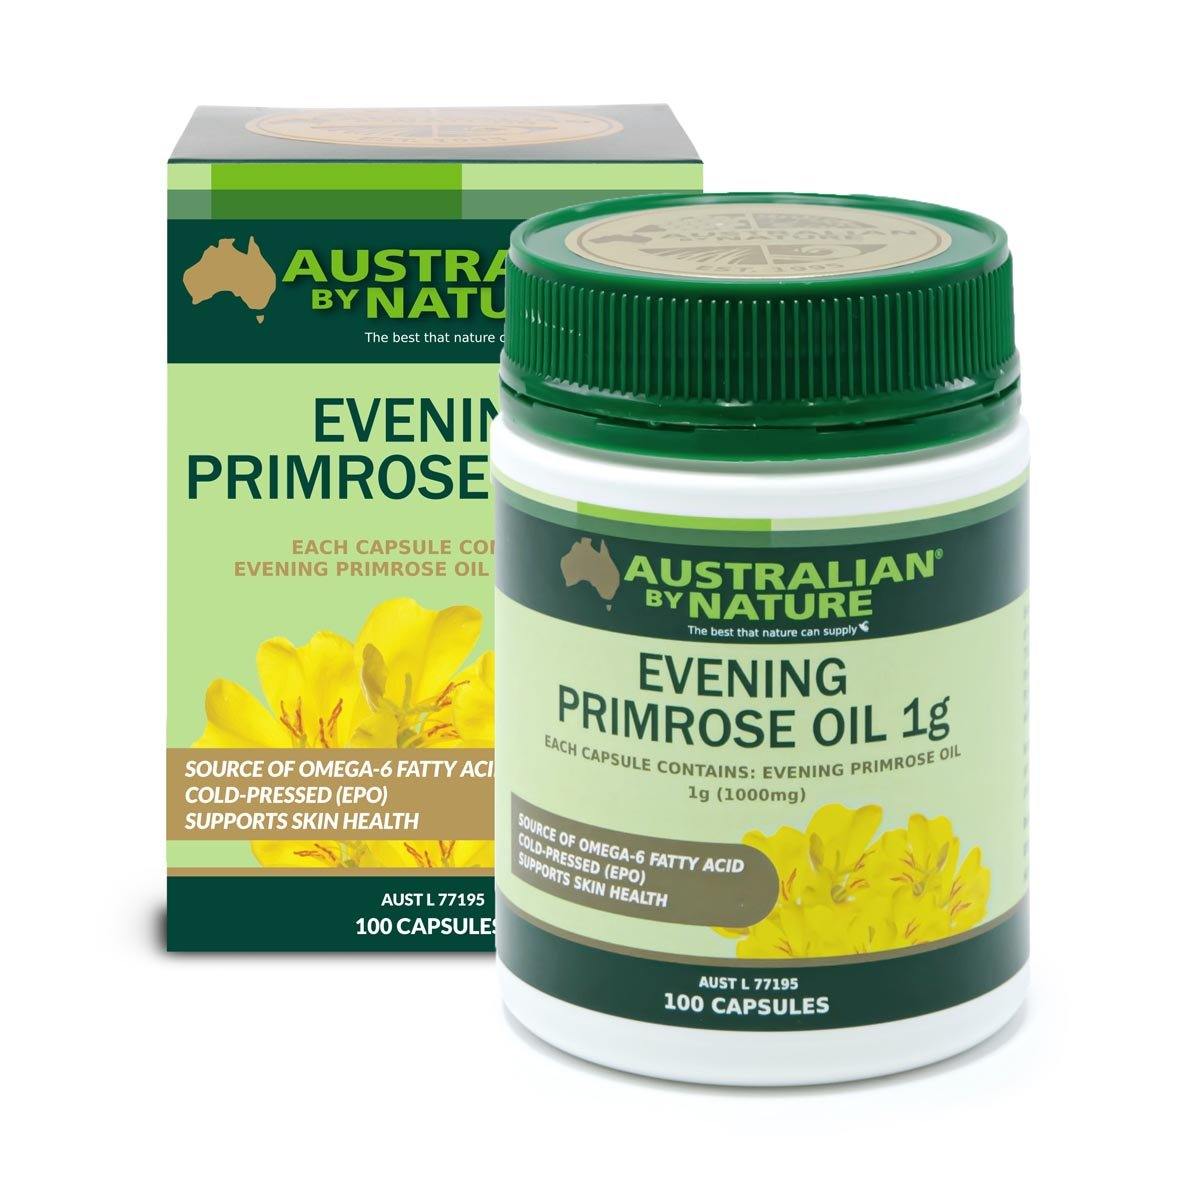 Australian by Nature Evening Primrose Oil 1g (1000mg) 100 Capsules - QVM Vitamins™